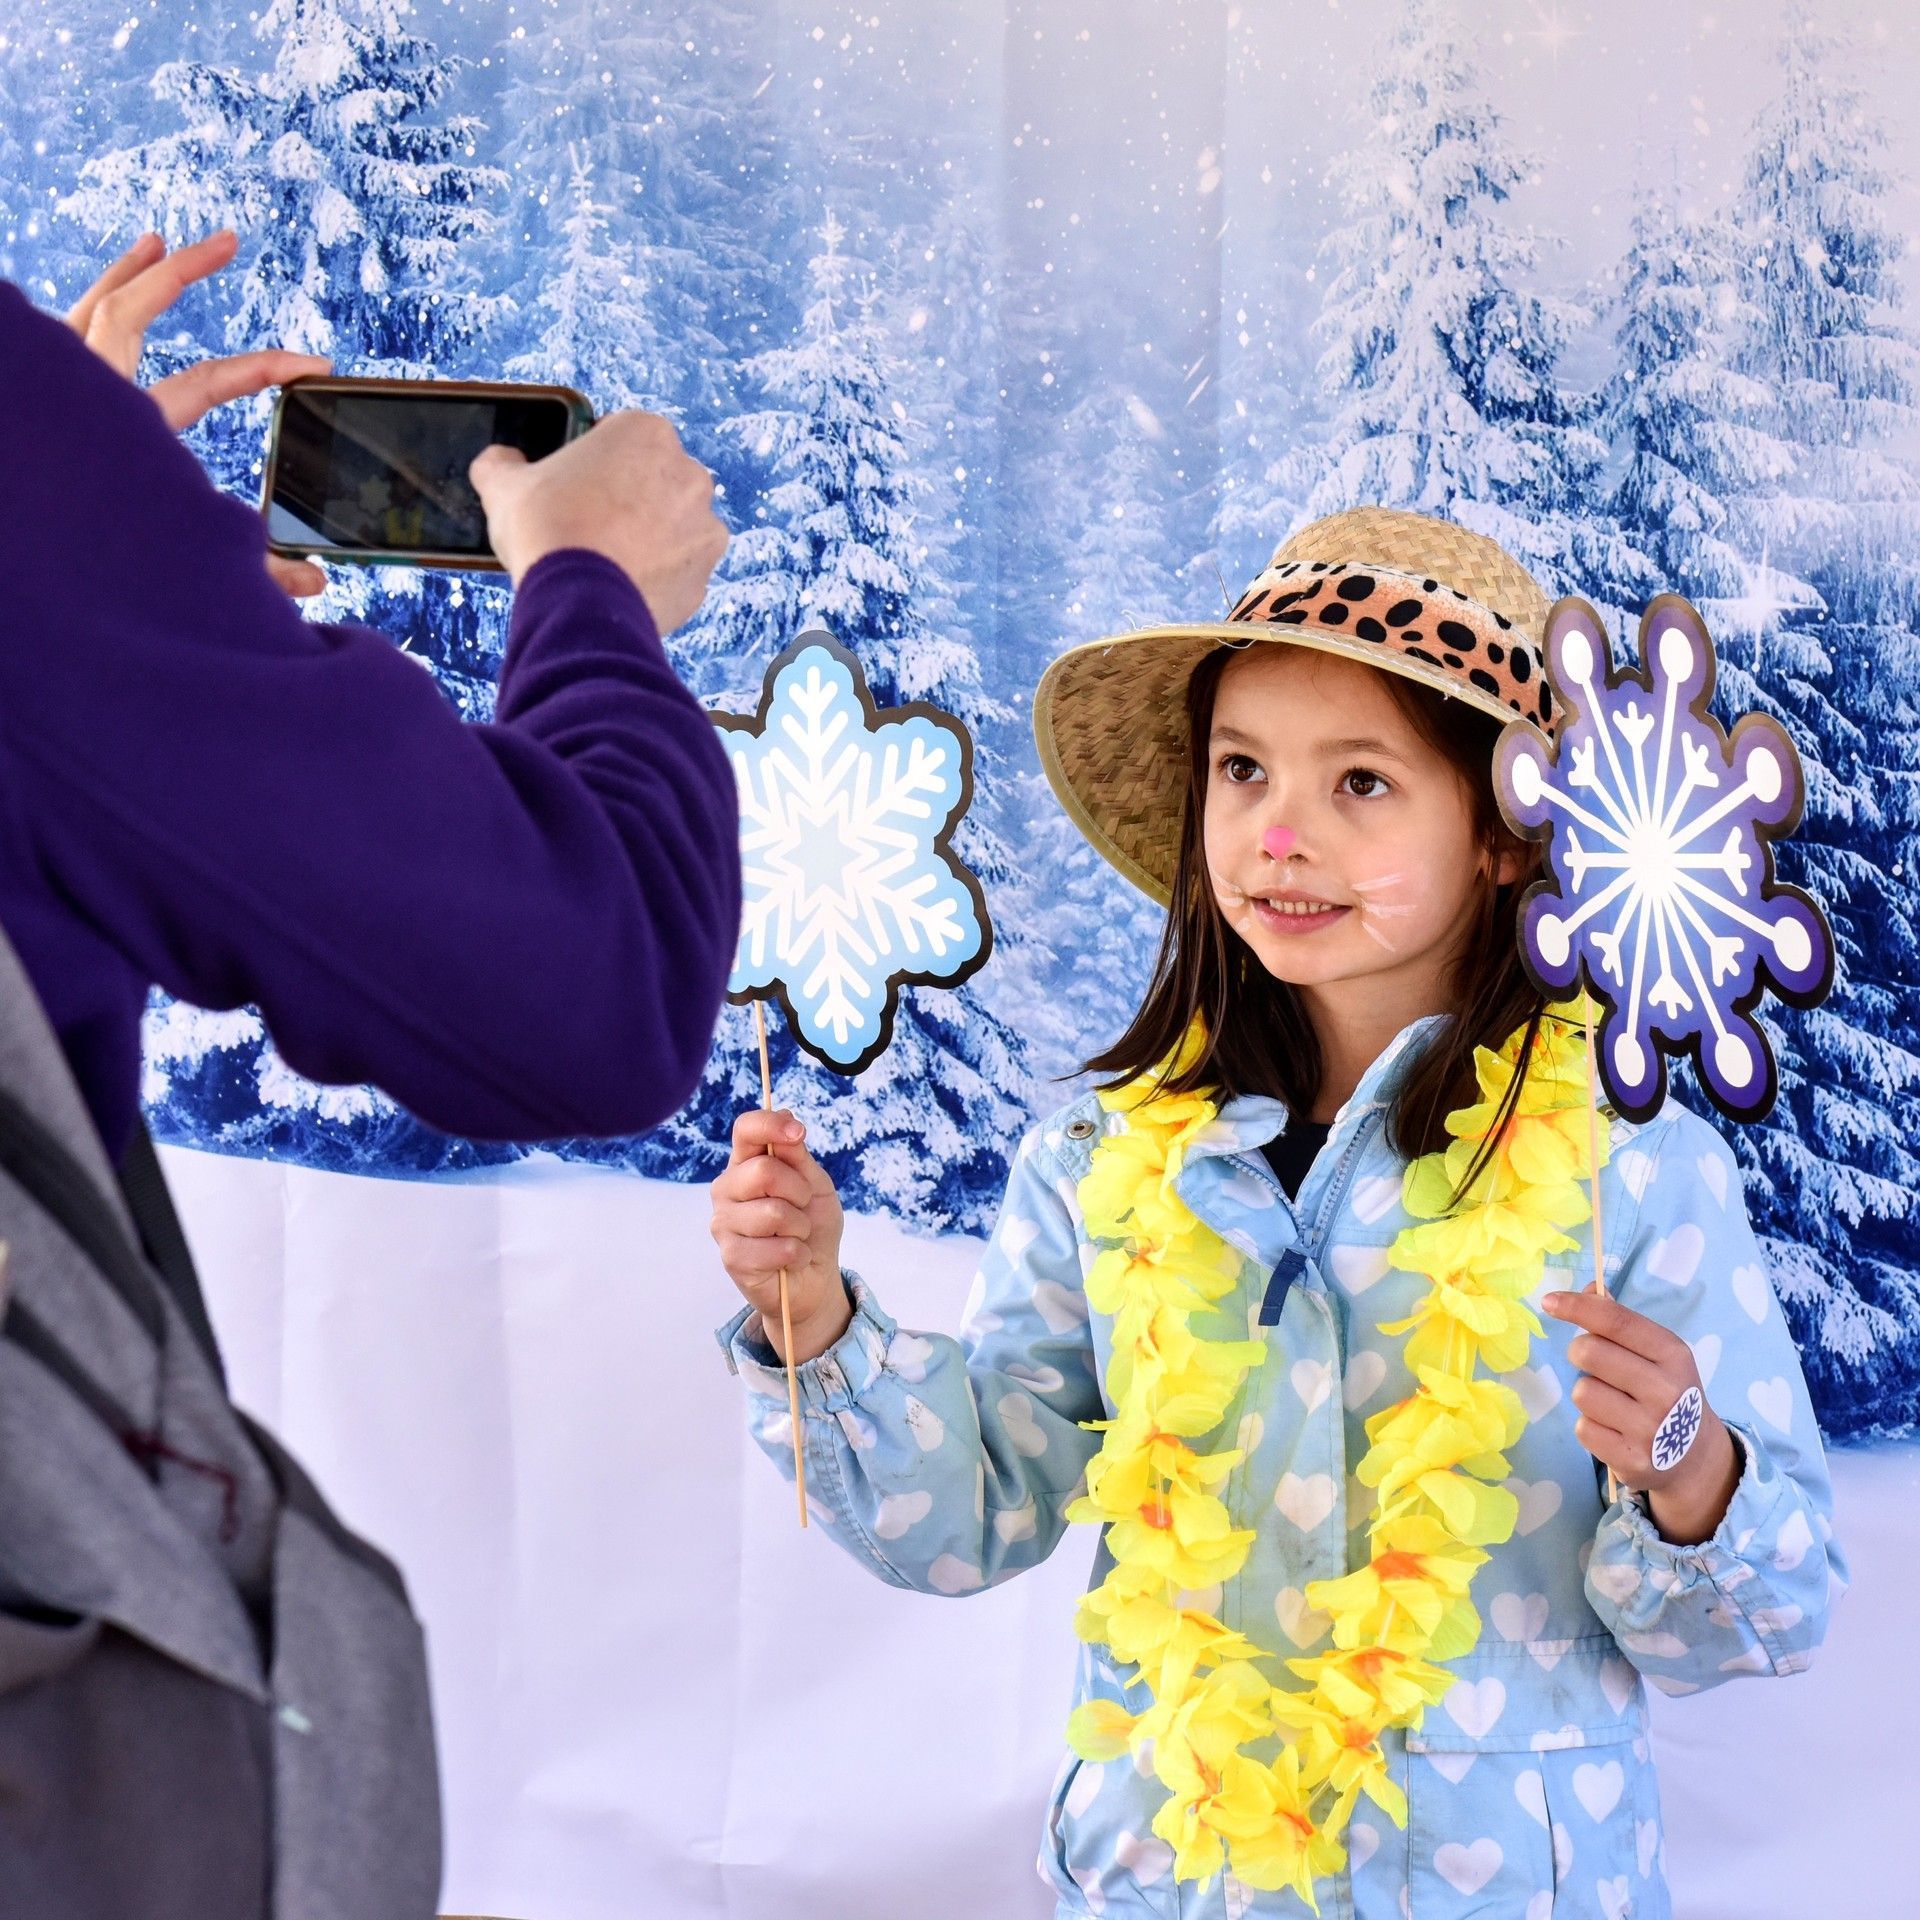 Bloomington's Winter Palooza Annual Celebration at Switchyard Park 